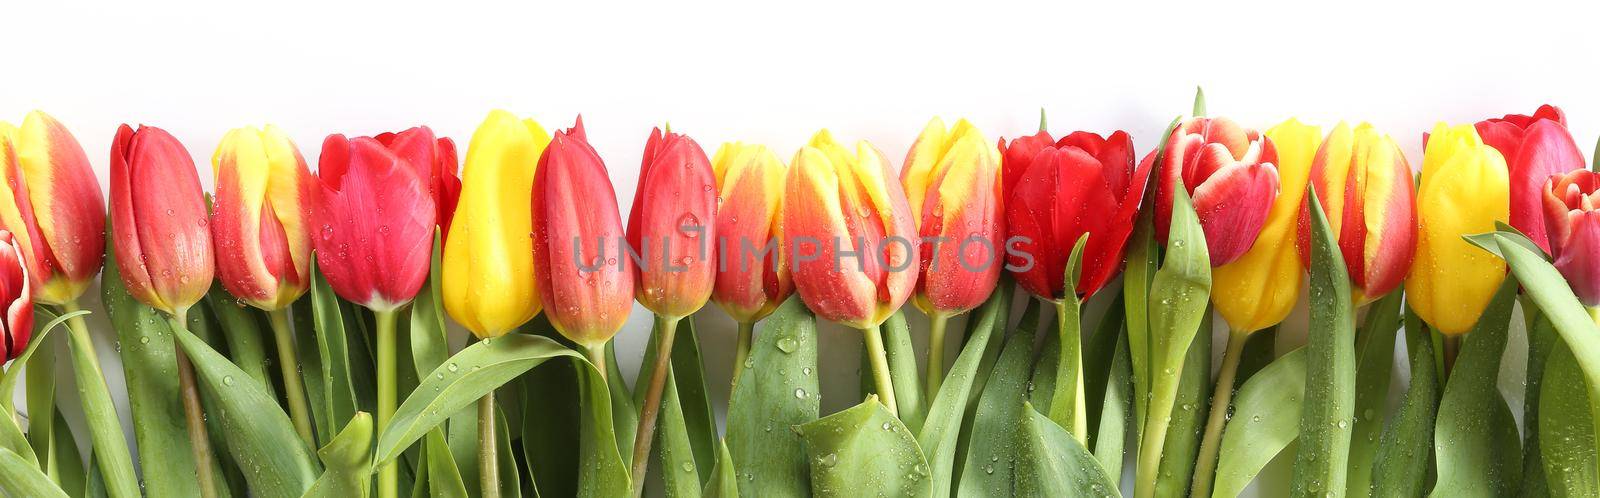 spring flowers tulips by NelliPolk